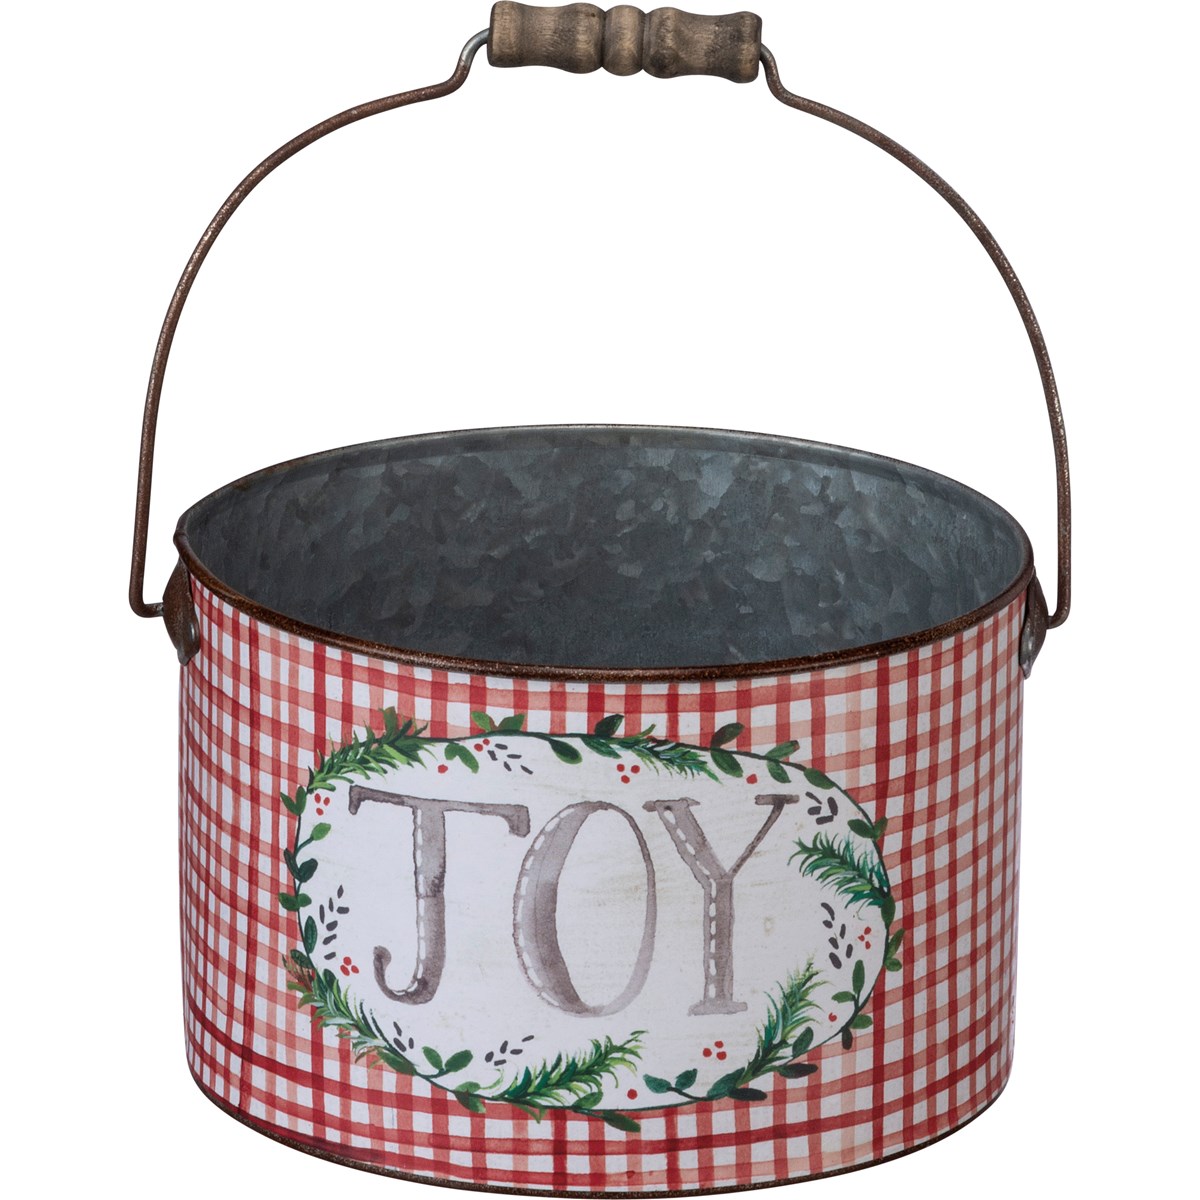 Joy Peace Bucket Set - Metal, Paper, Wood